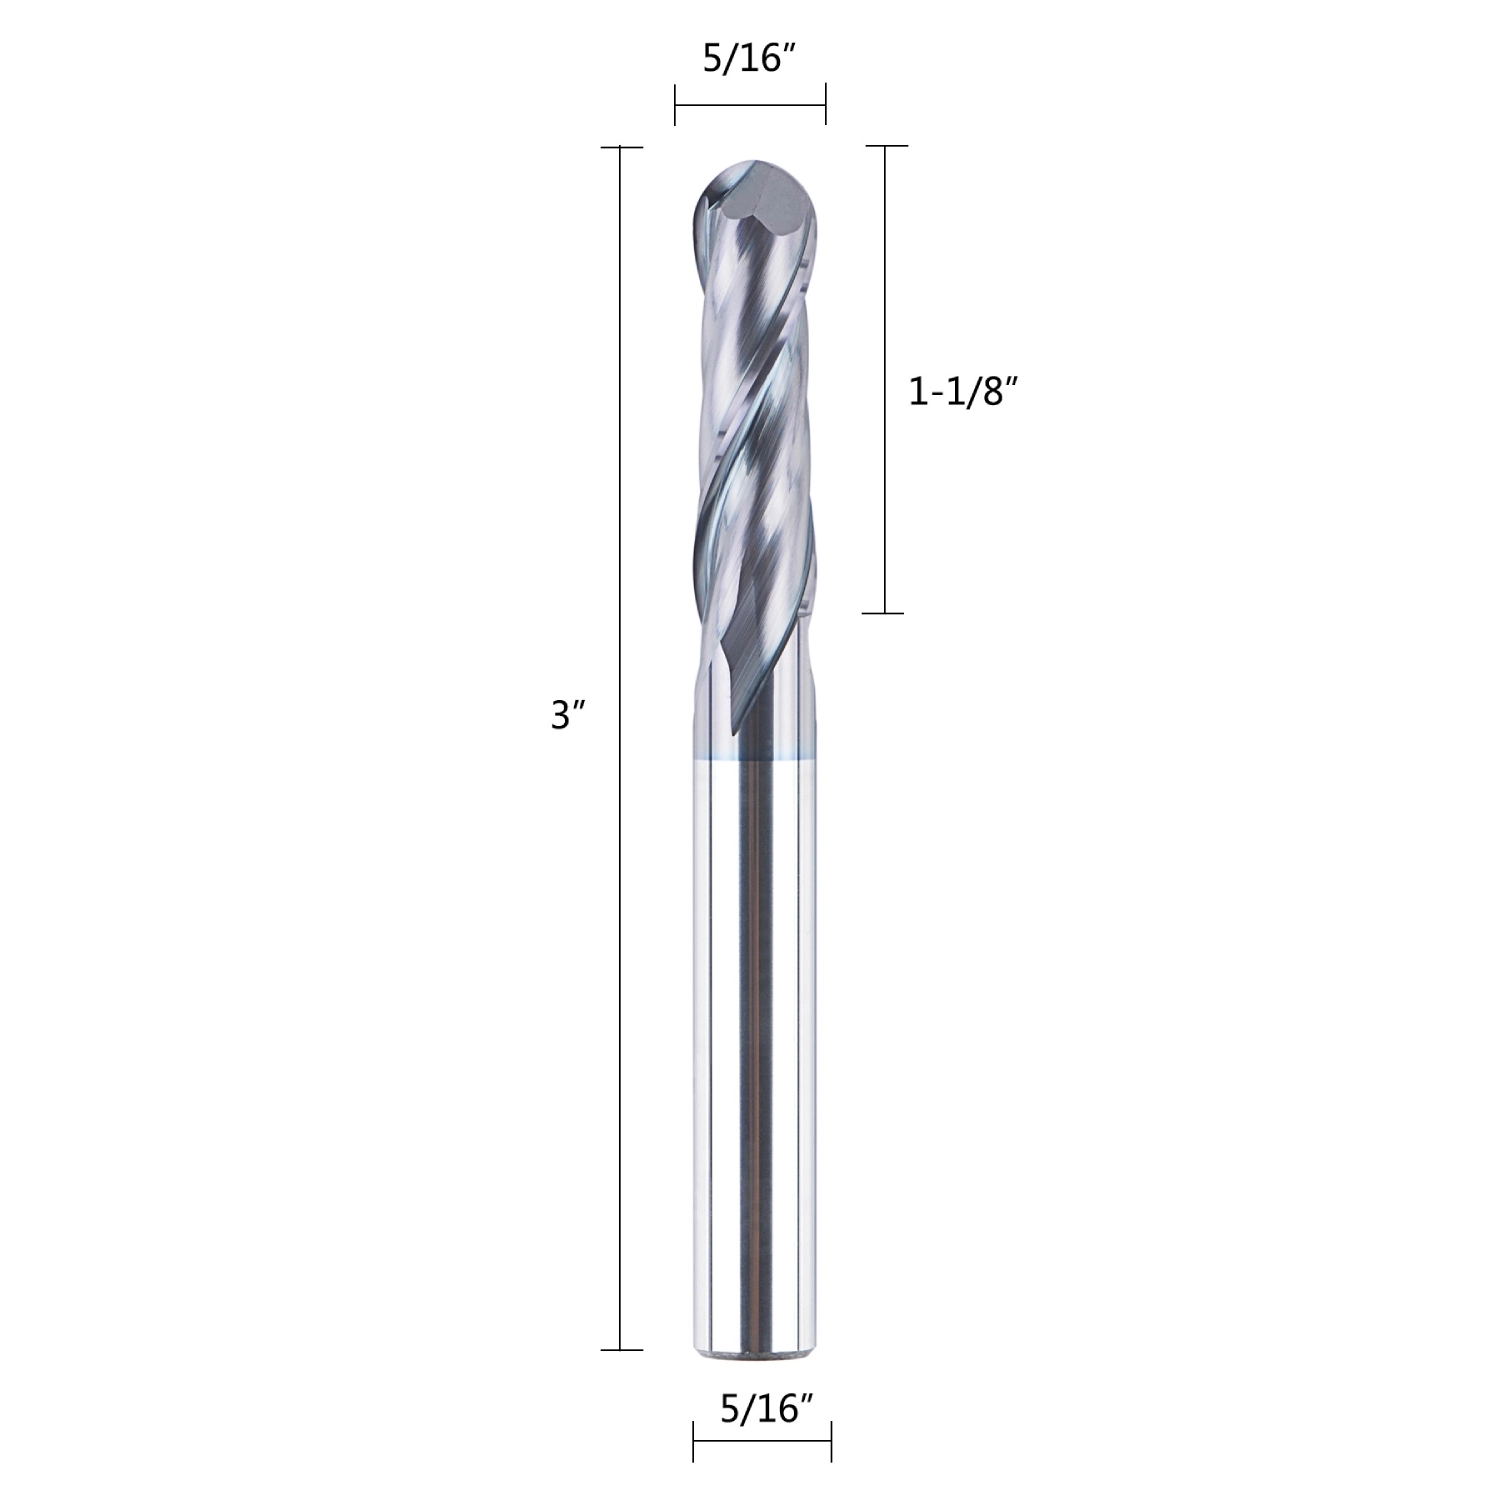 SpeTool 2 Flutes Carbide End Mill Ball Nose 5/16" Shank Extra 3" Long